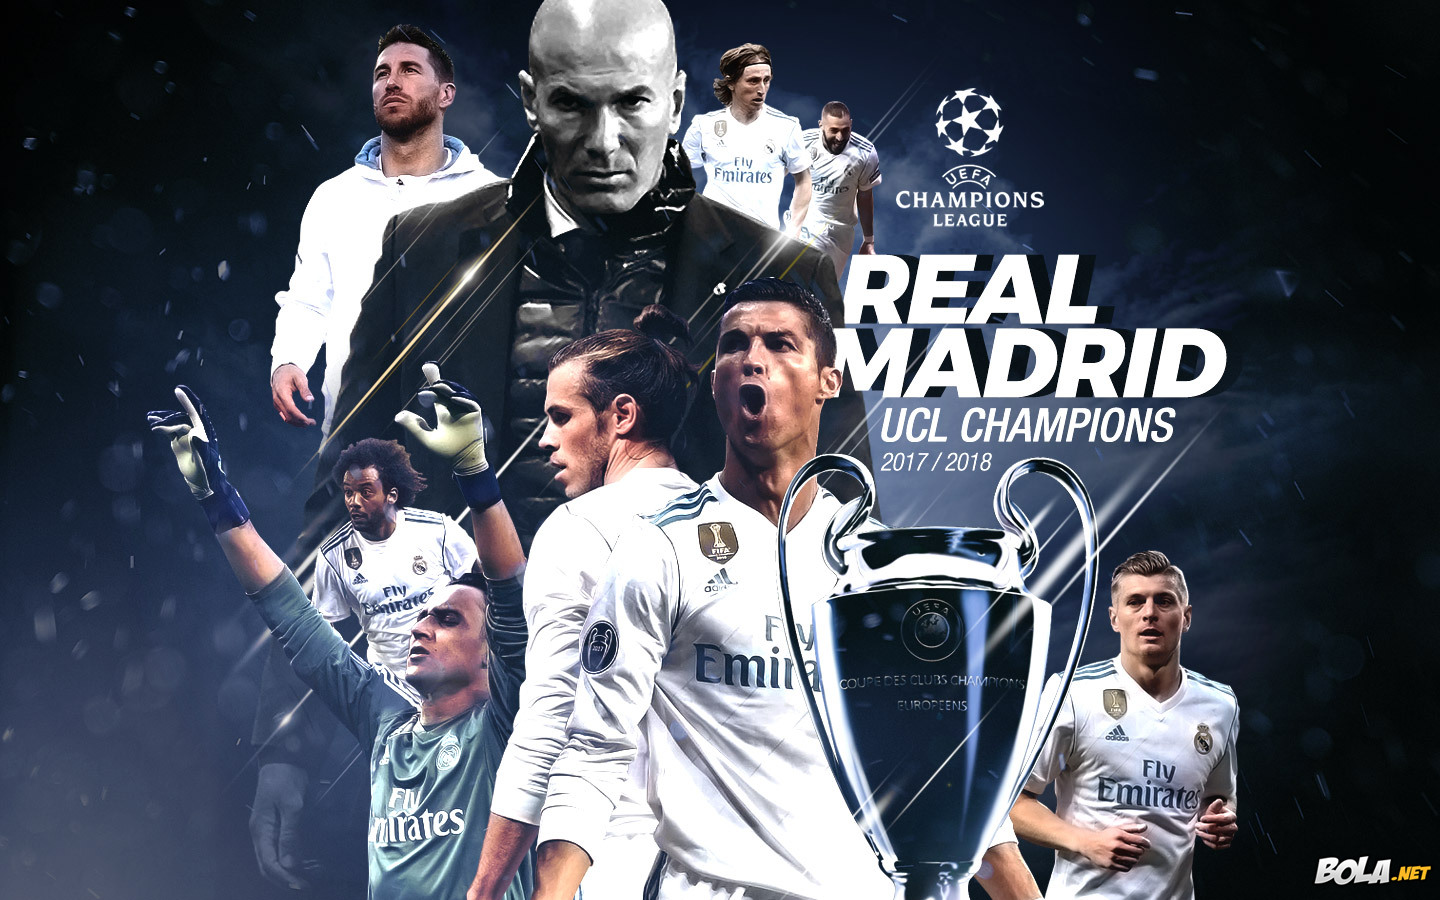 Deskripsi : Wallpaper Real Madrid, Ucl Winner 2017/201, size: 1440x900